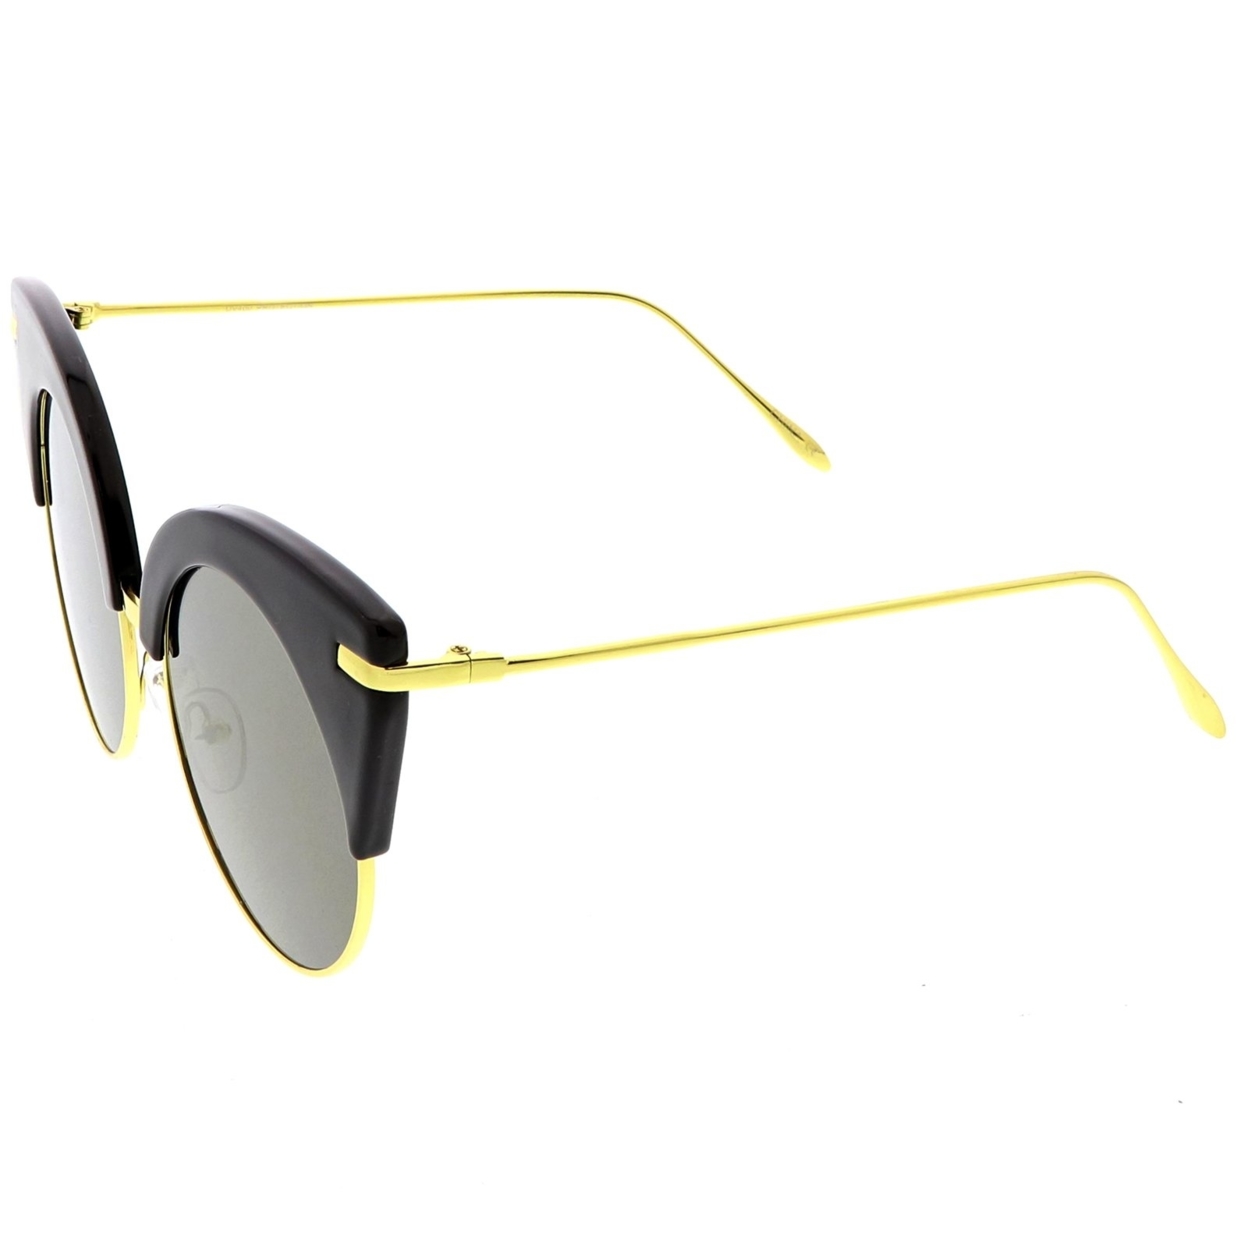 Oversize Half Frame Cat Eye Sunglasses Ultra Slim Arms Round Mirrored Flat Lens 54mm - Black Gold / Pink Mirror